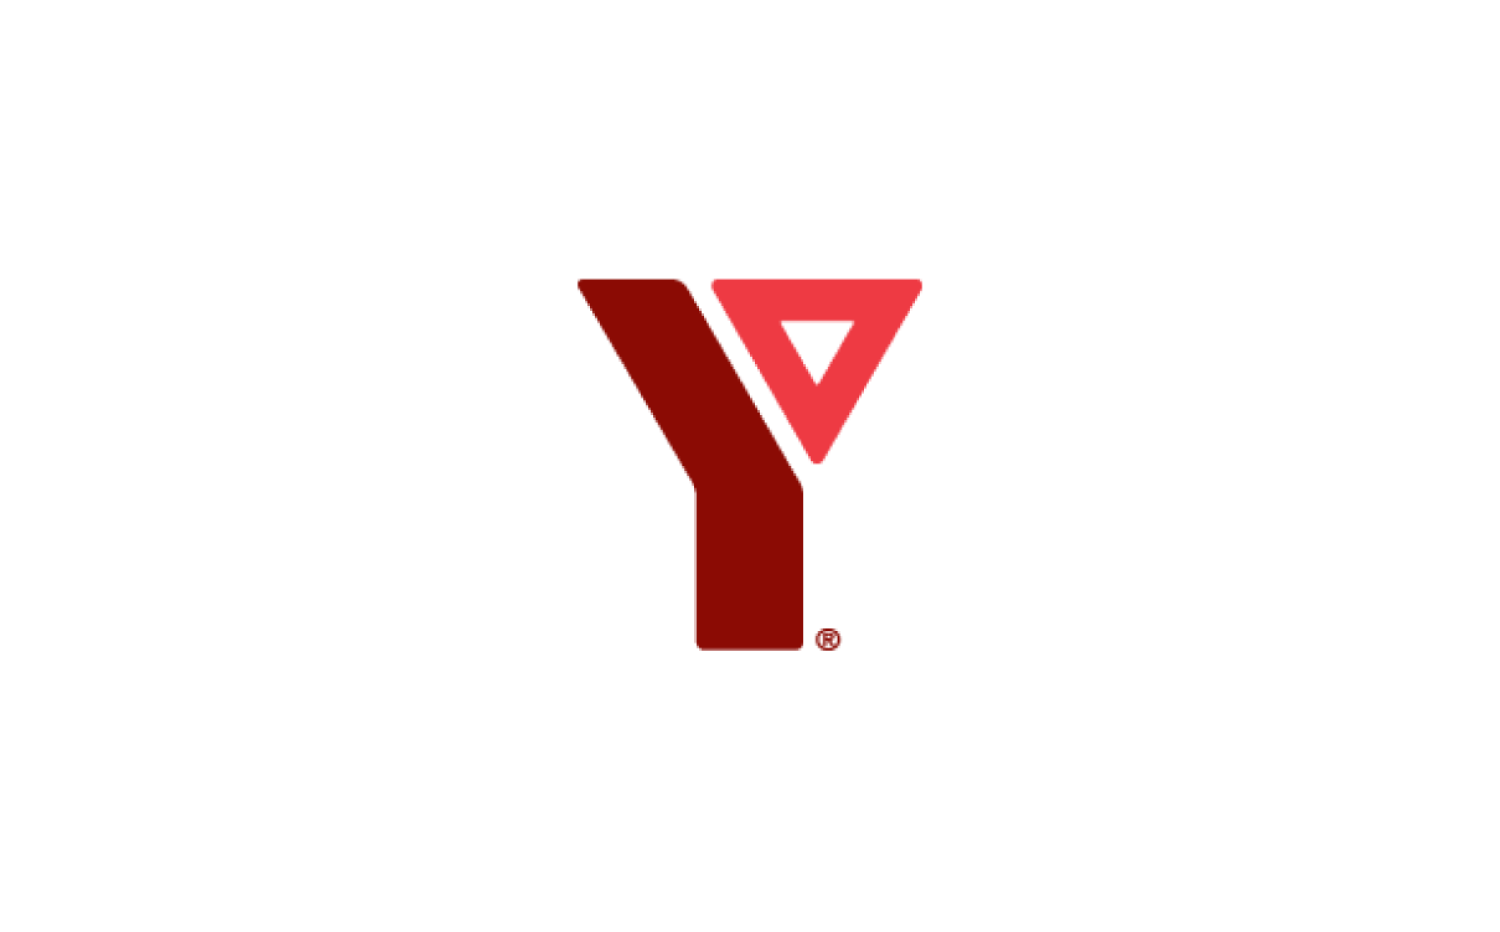 The YMCA of Exploits Valley logo.